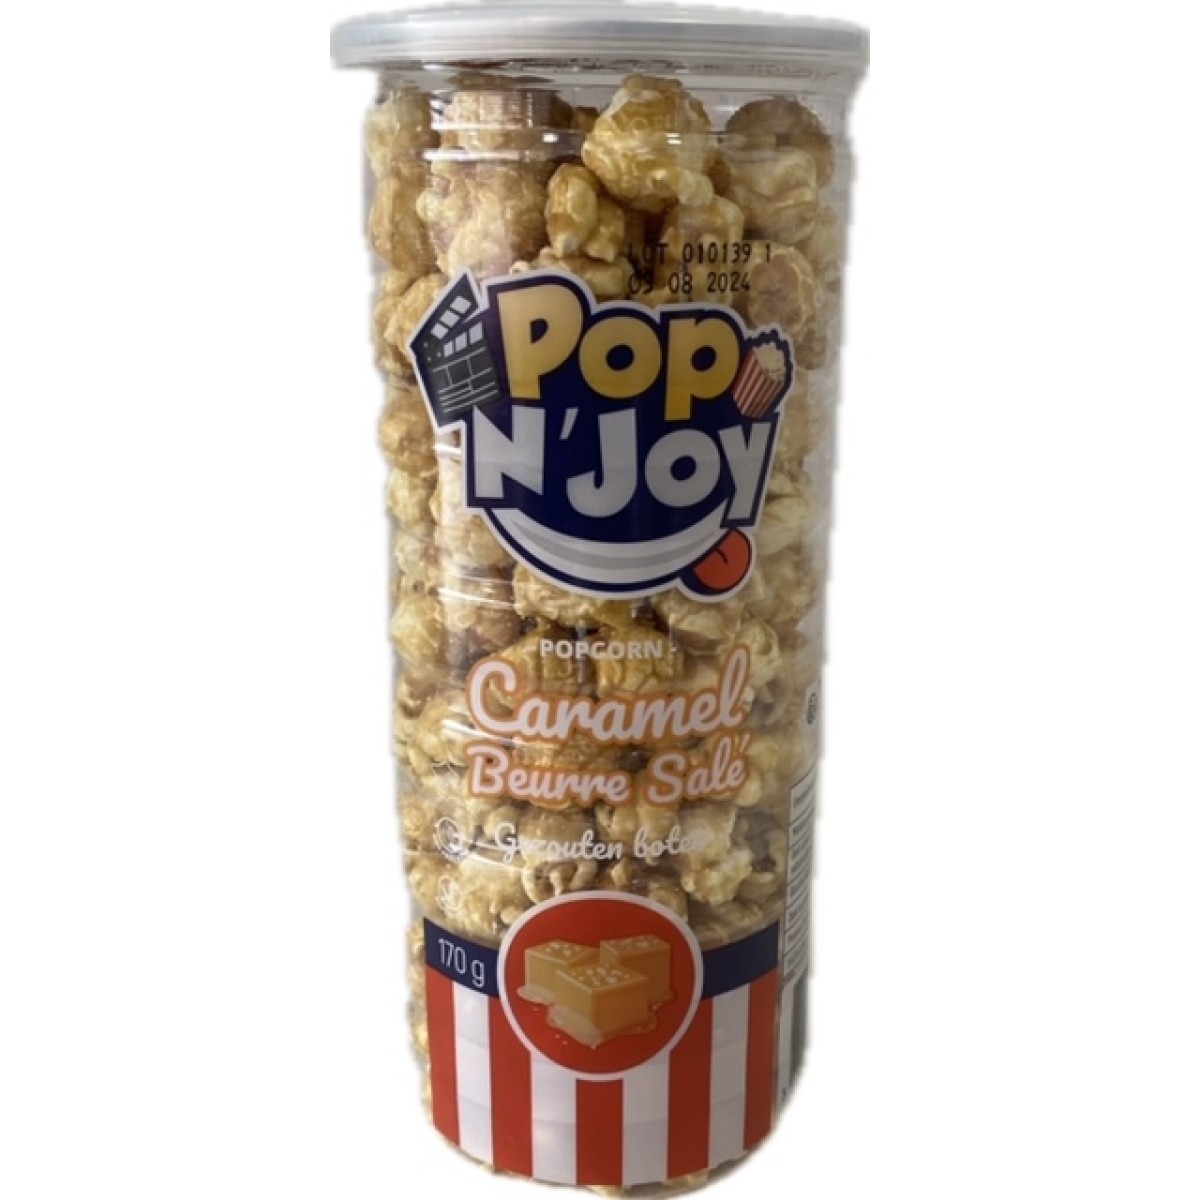 popcorn pop n'joy caramel